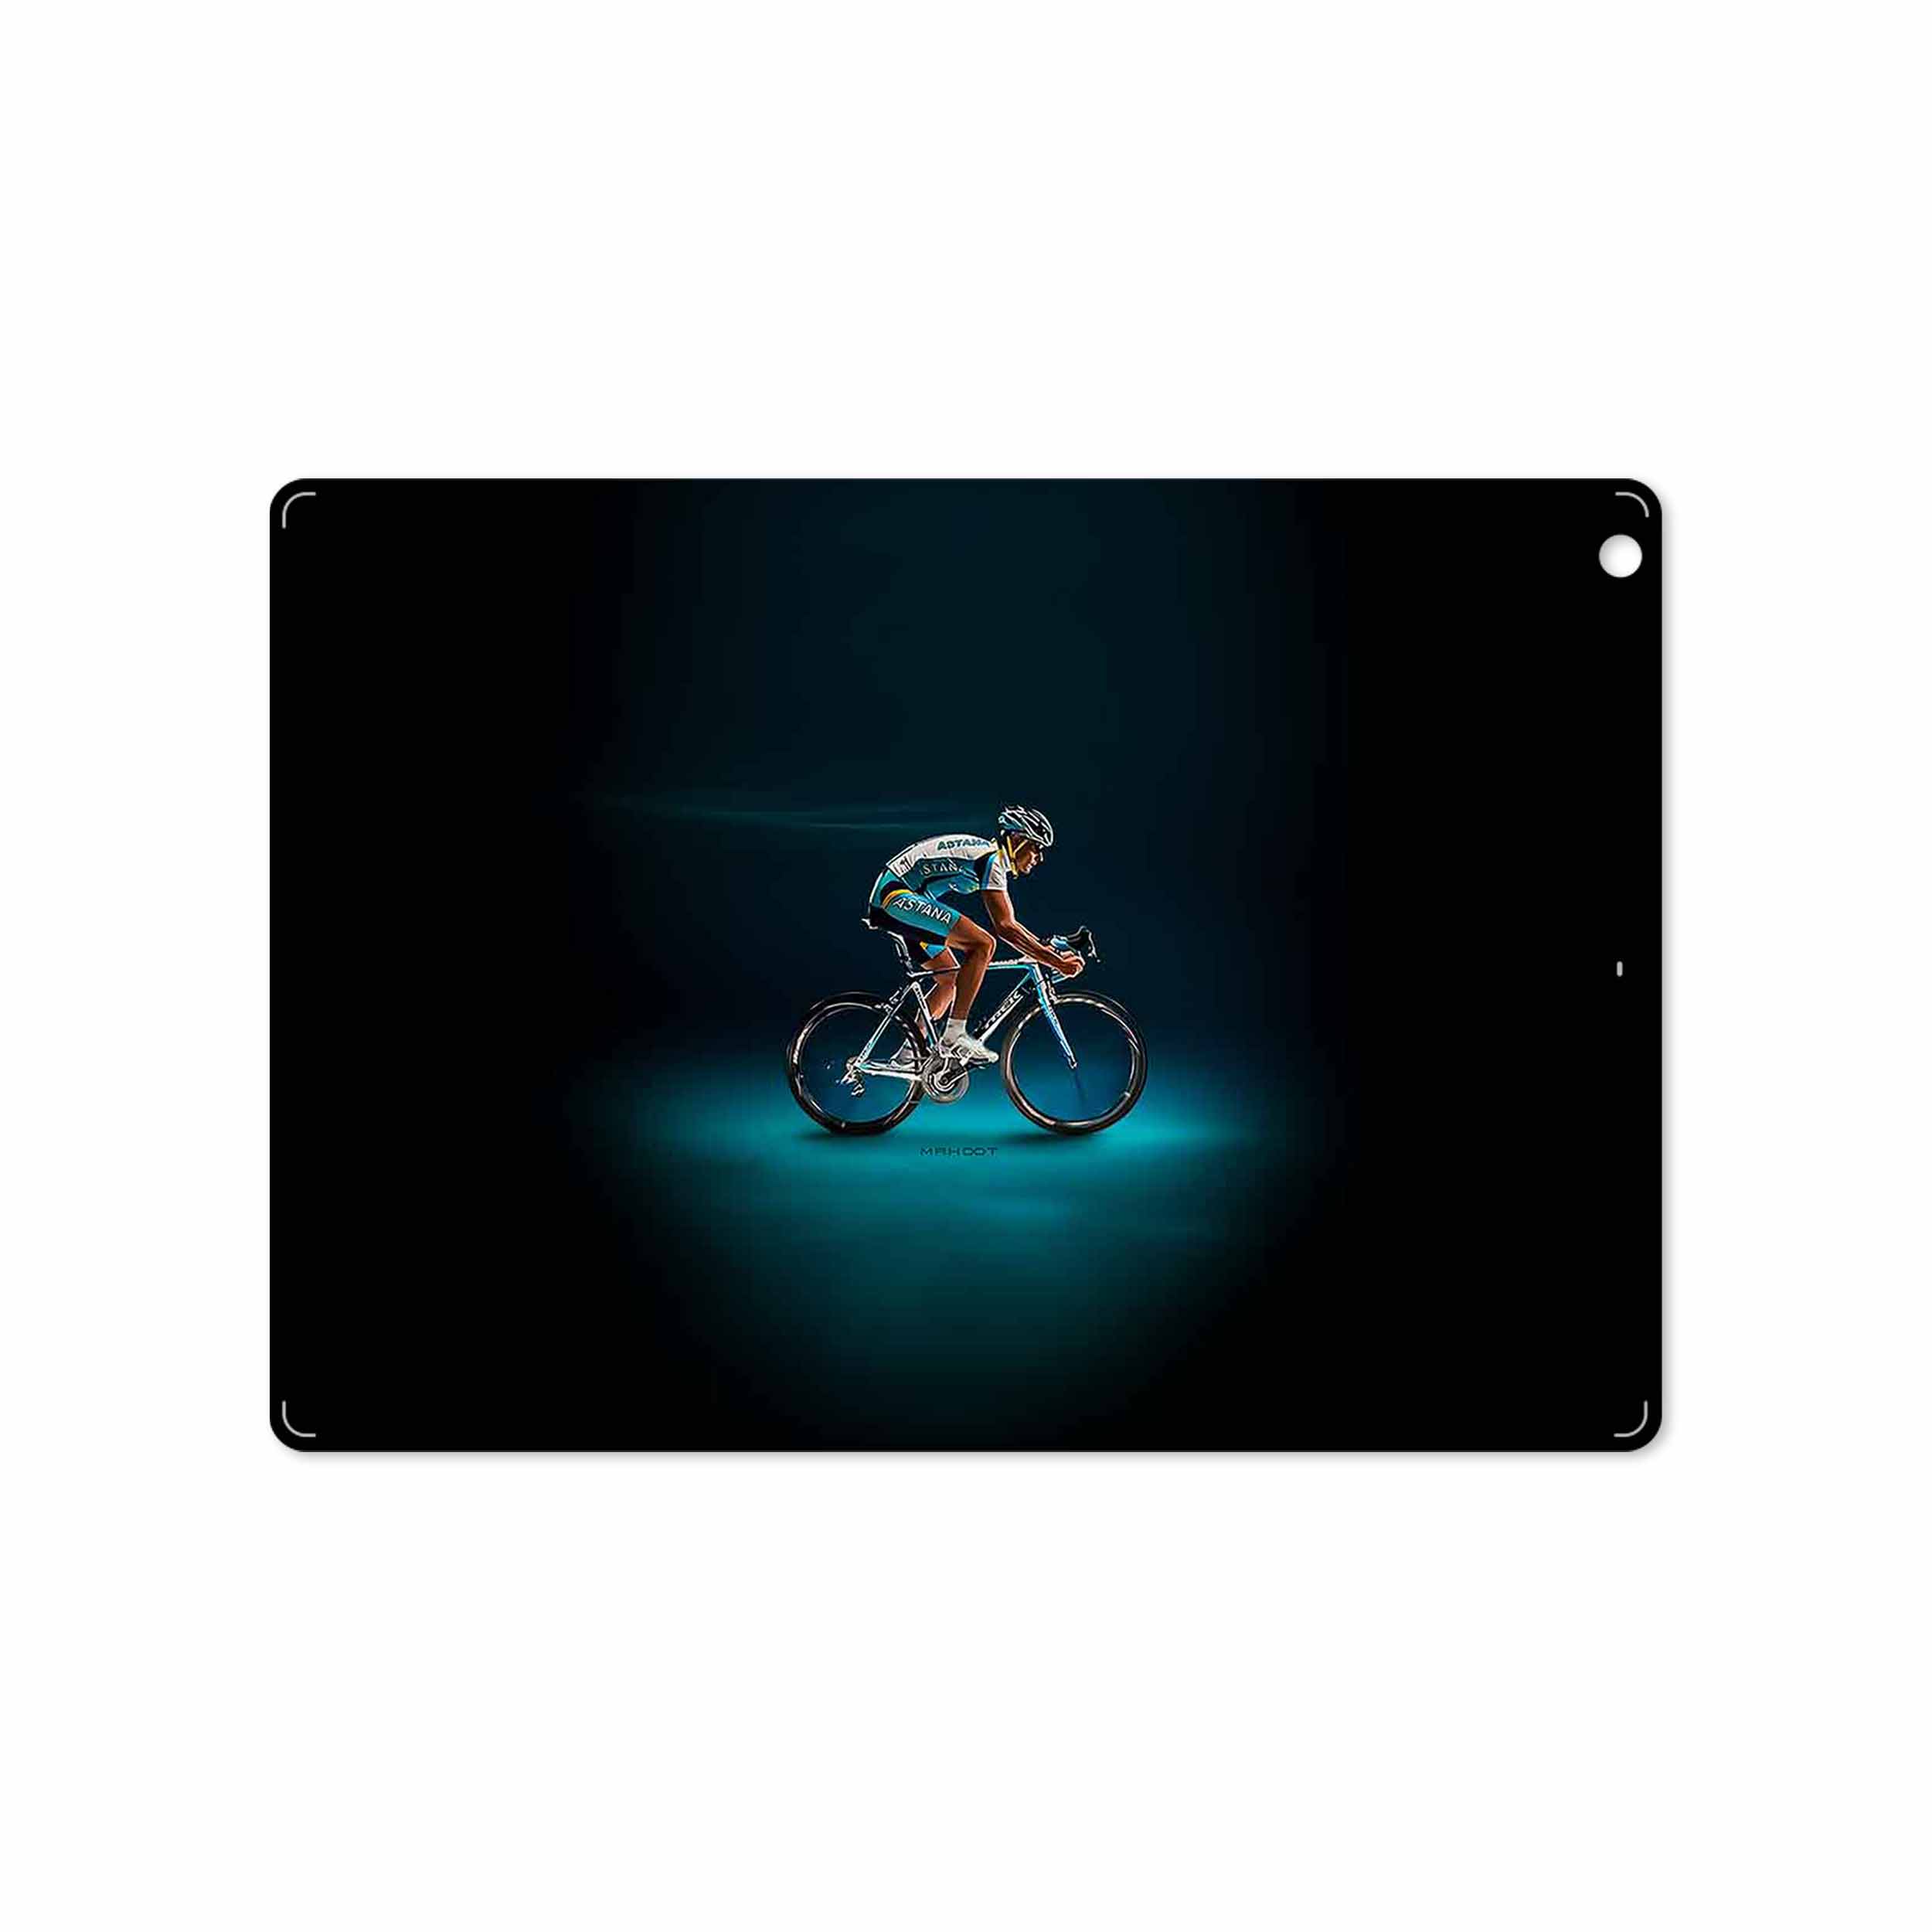 برچسب پوششی ماهوت مدل Road cycling مناسب برای تبلت اپل iPad Air 2013 A1476